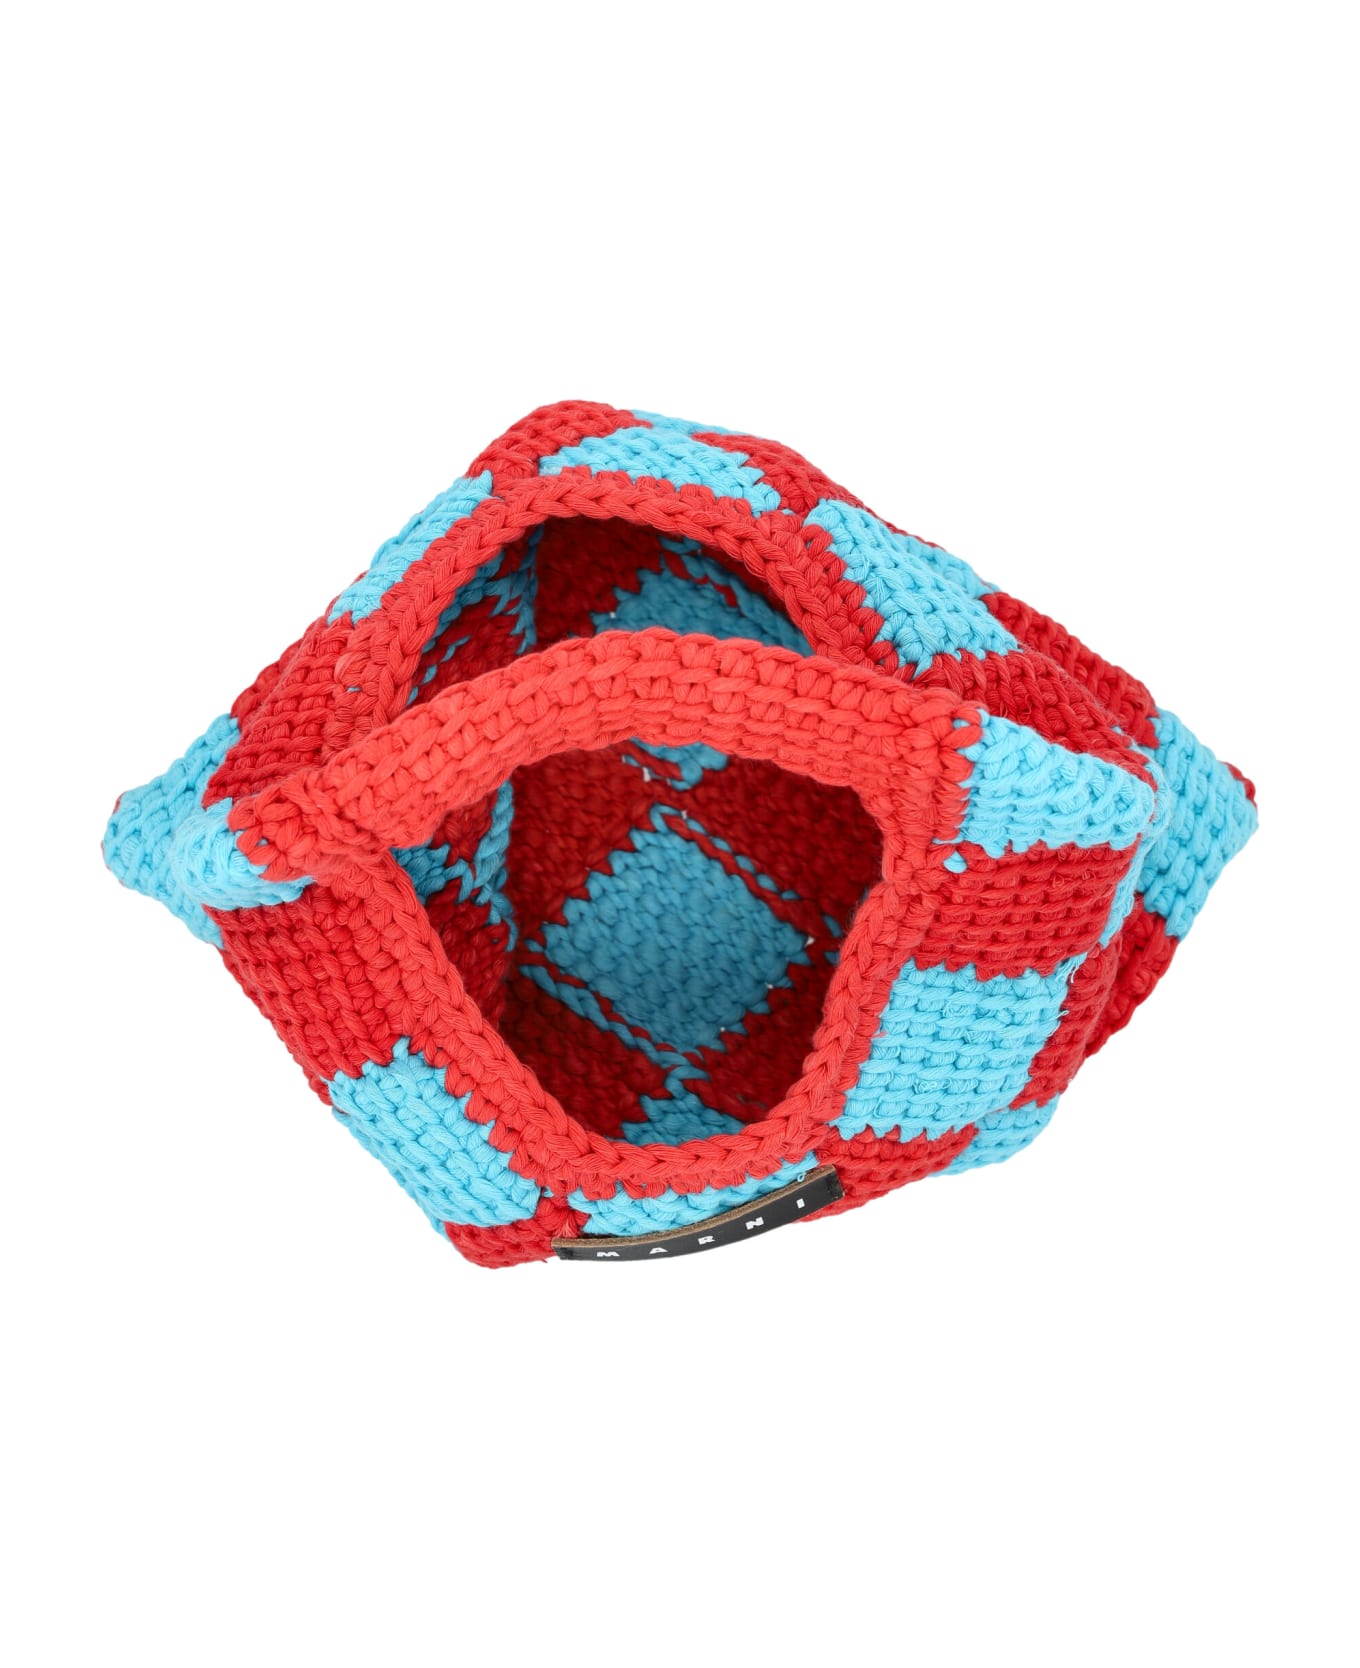 Marni Diamond Crochet Bag - BLUE/RED